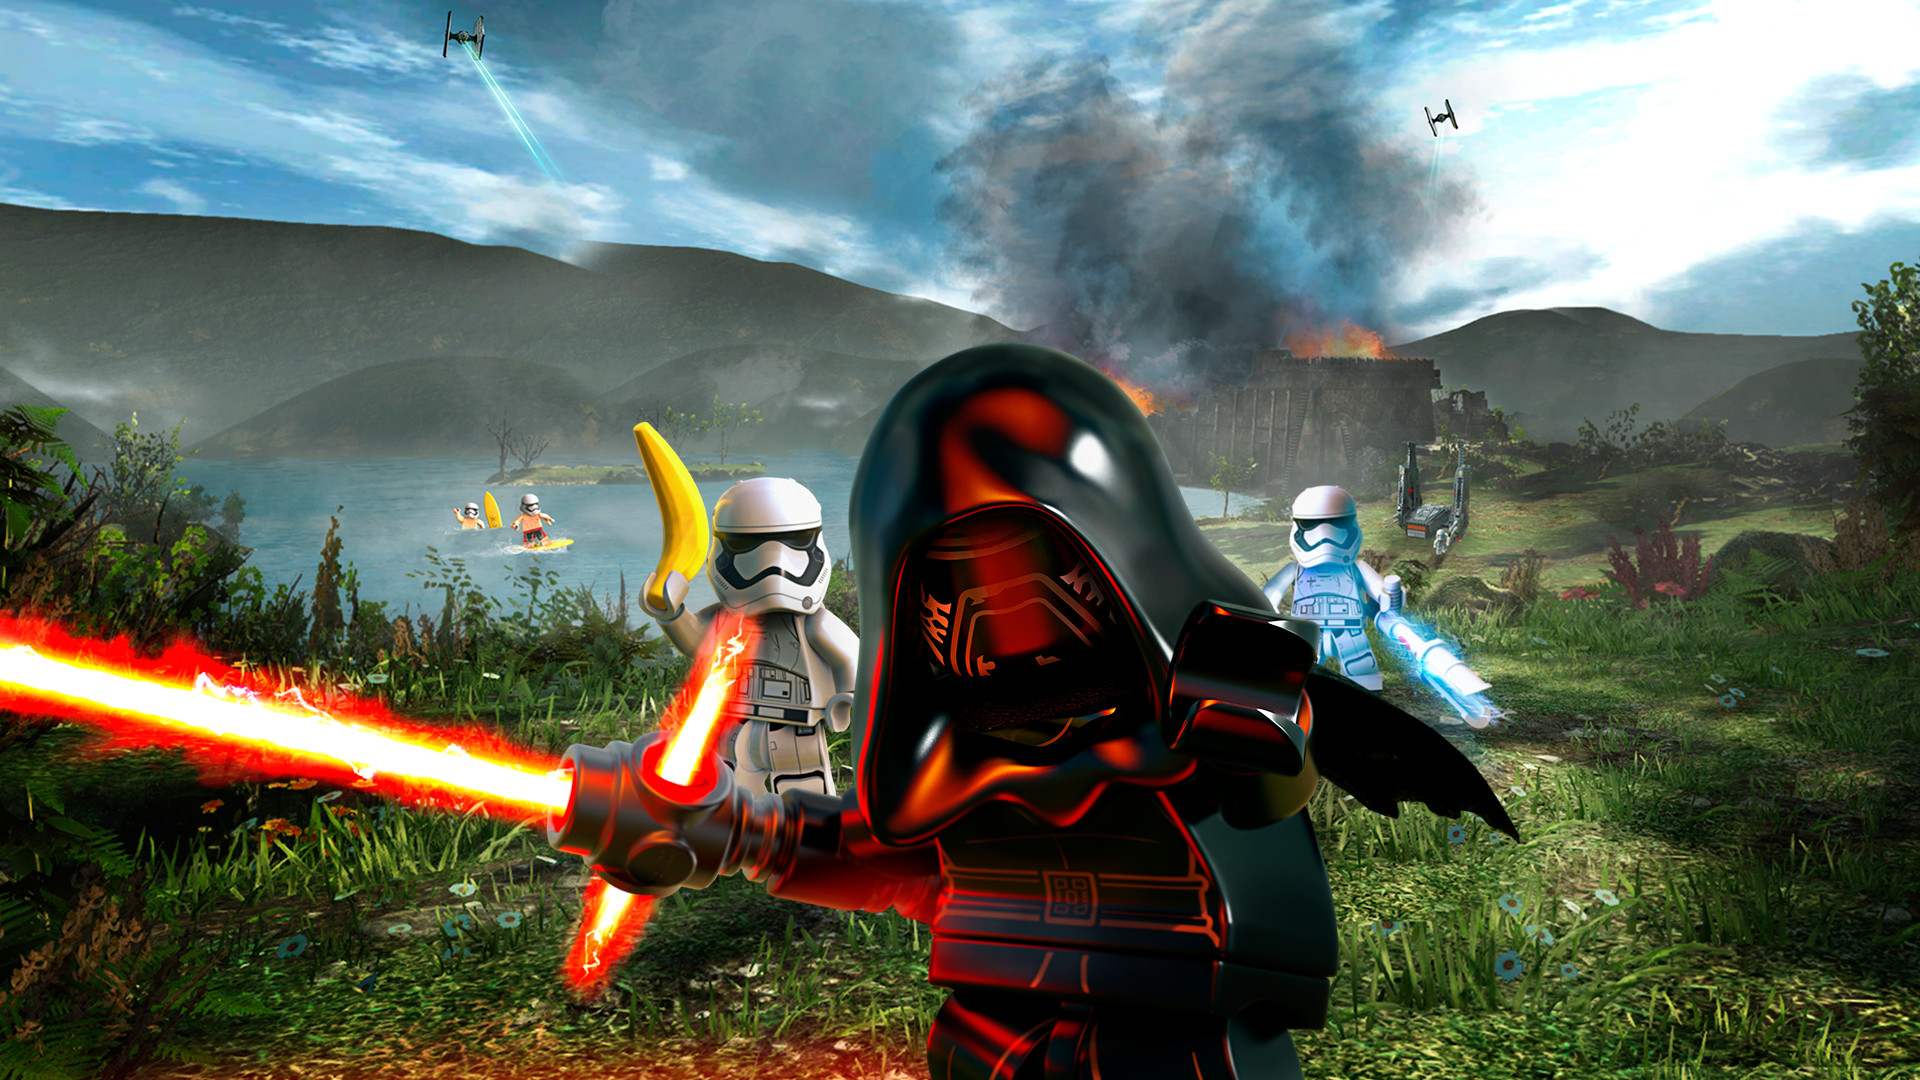 LEGO Star Wars: The Force Awakens - First Order Siege of Takodana Level Pack DLC Steam CD Key [$ 2.25]